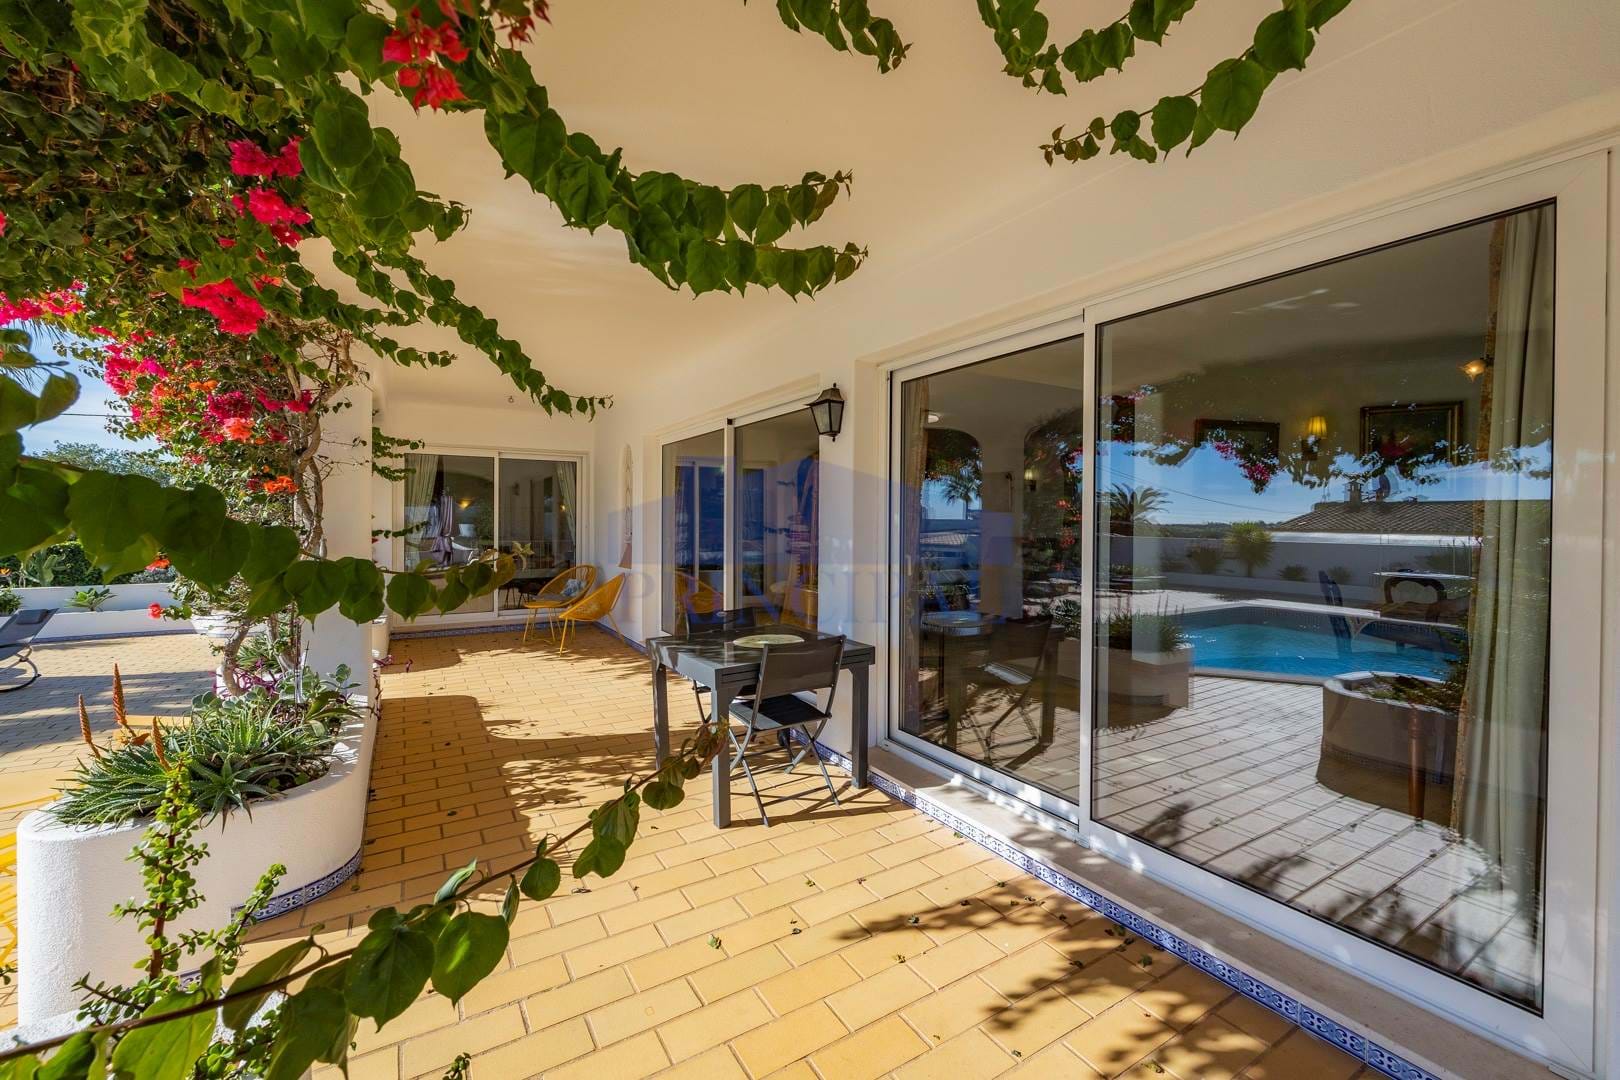 Detached 4 (3+1) Bedroom villa with pool, quiet residential area